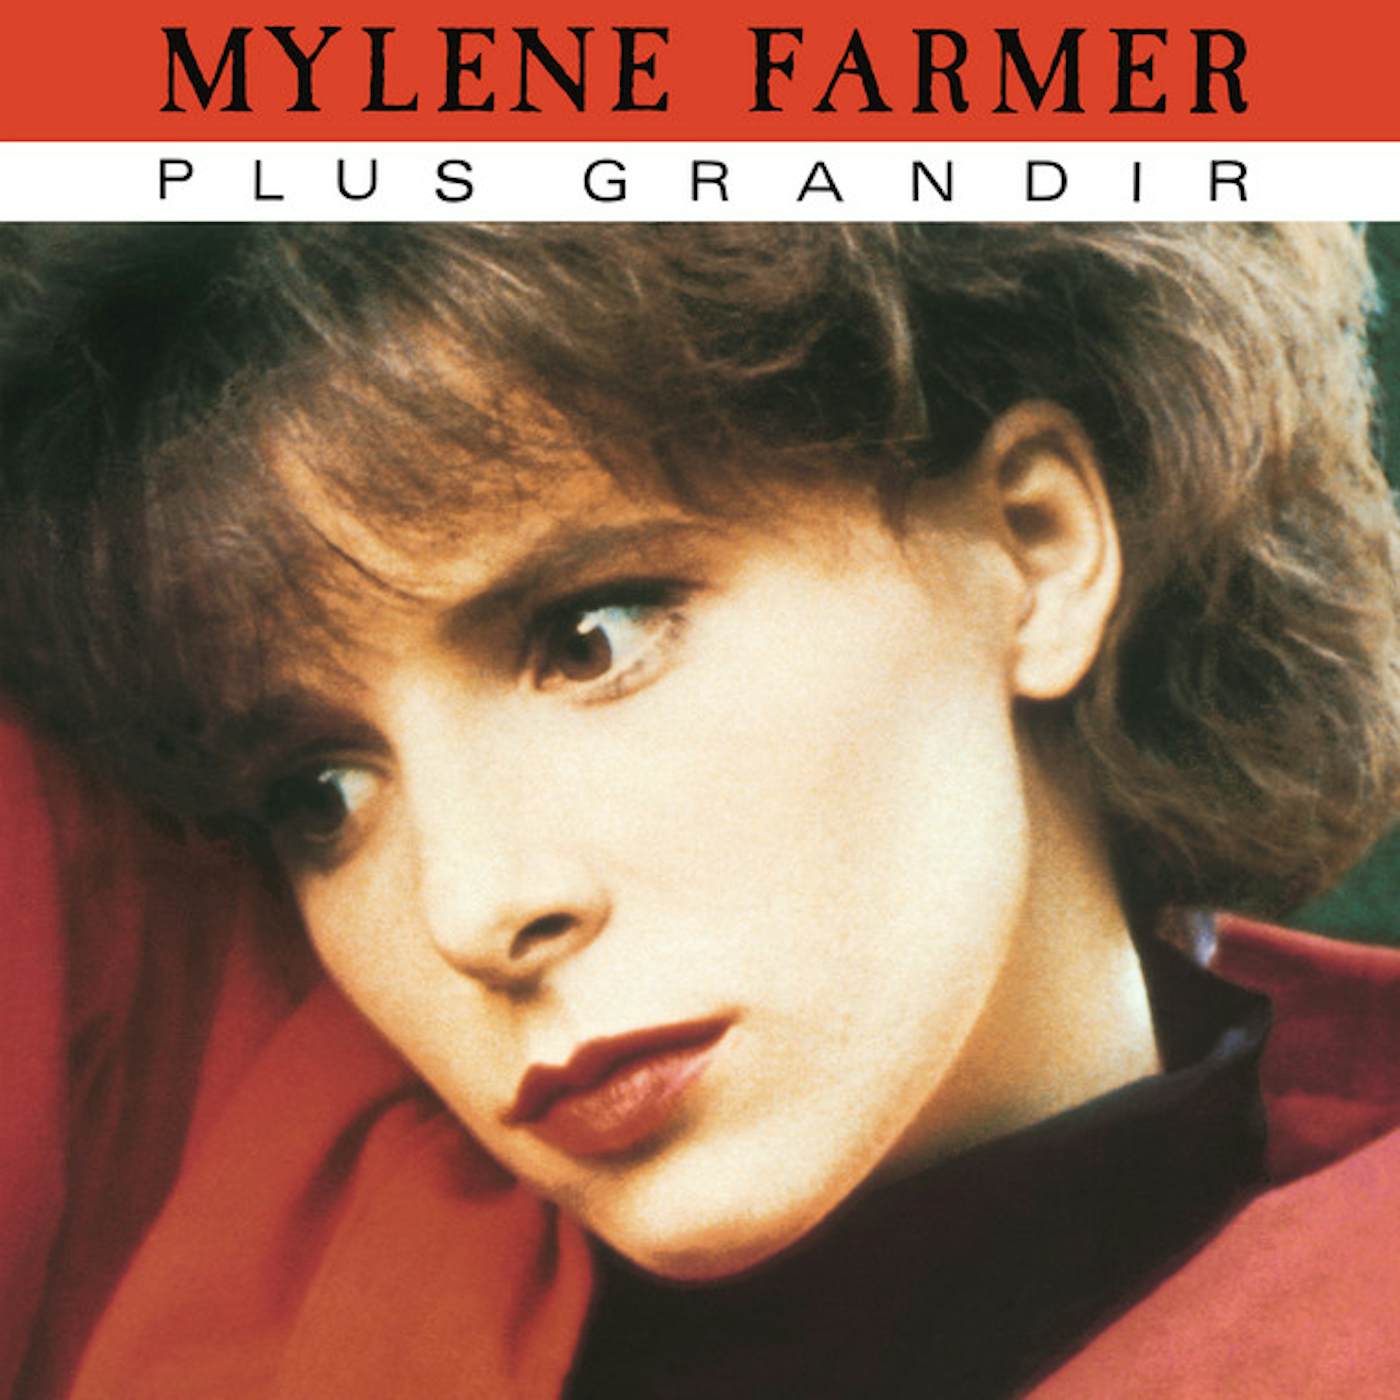 Mylène Farmer Plus grandir Vinyl Record